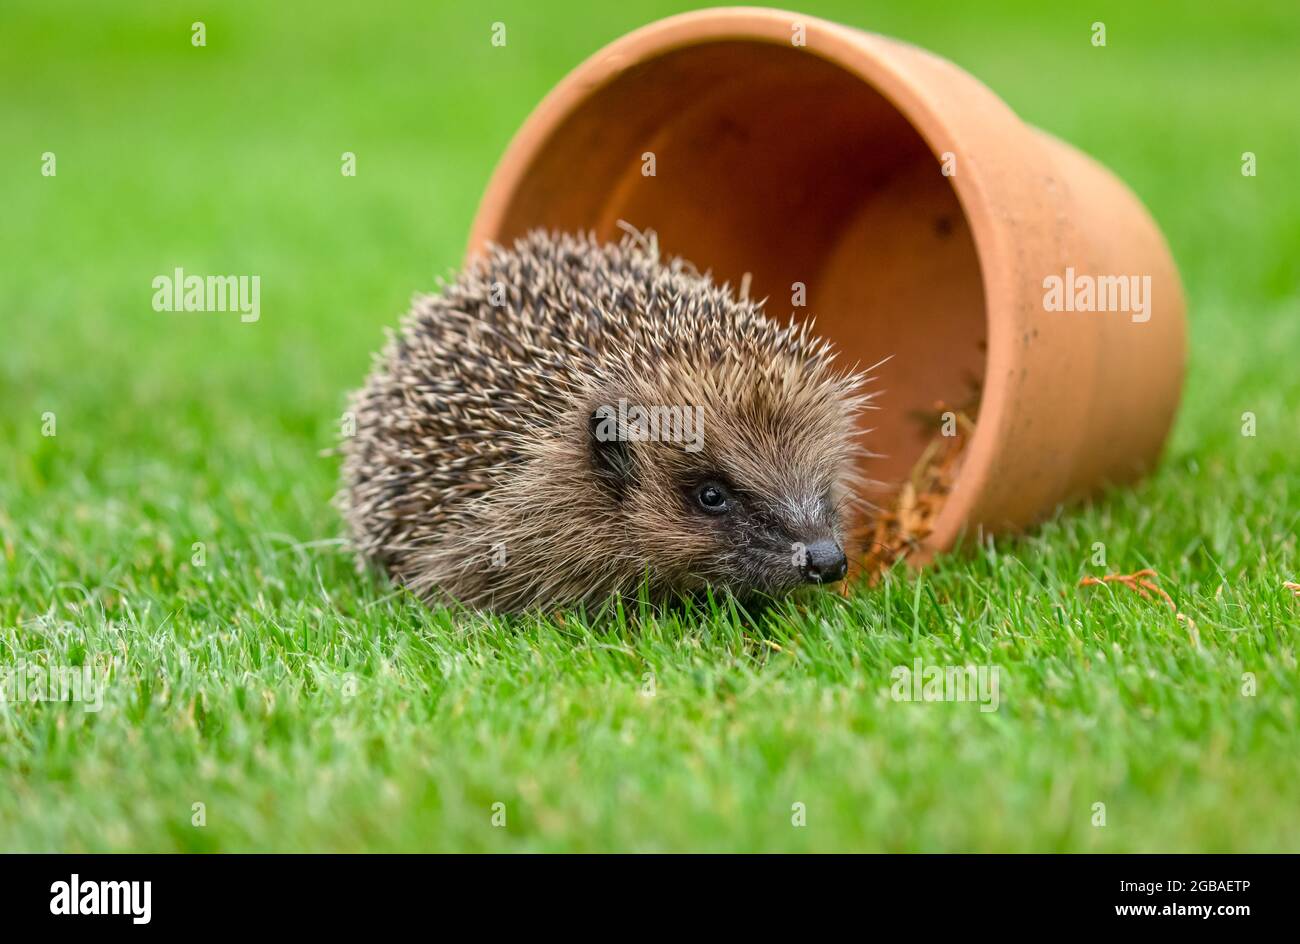 Hedgehog, Scientific name: Erinaceus Europaeus.  Wild, native, European hedgehog in natural garden habitat, with terracotta plant pot.  Facing right. Stock Photo